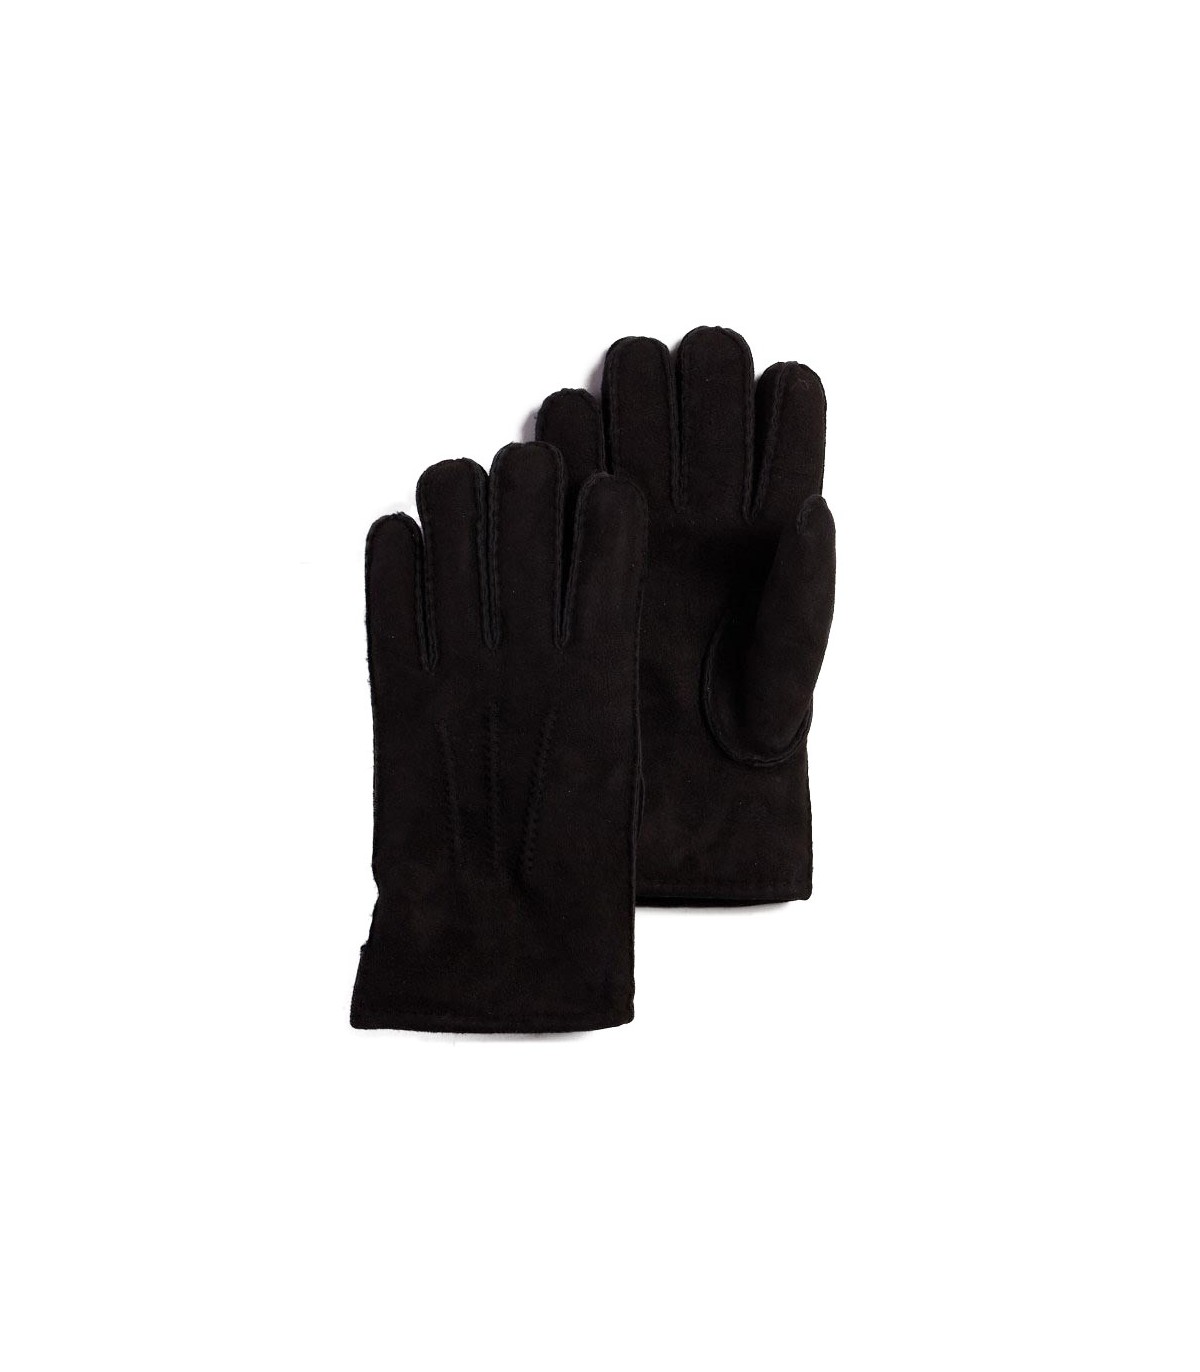 Mens Black Leather Gloves One Size 100% Sheepskin 